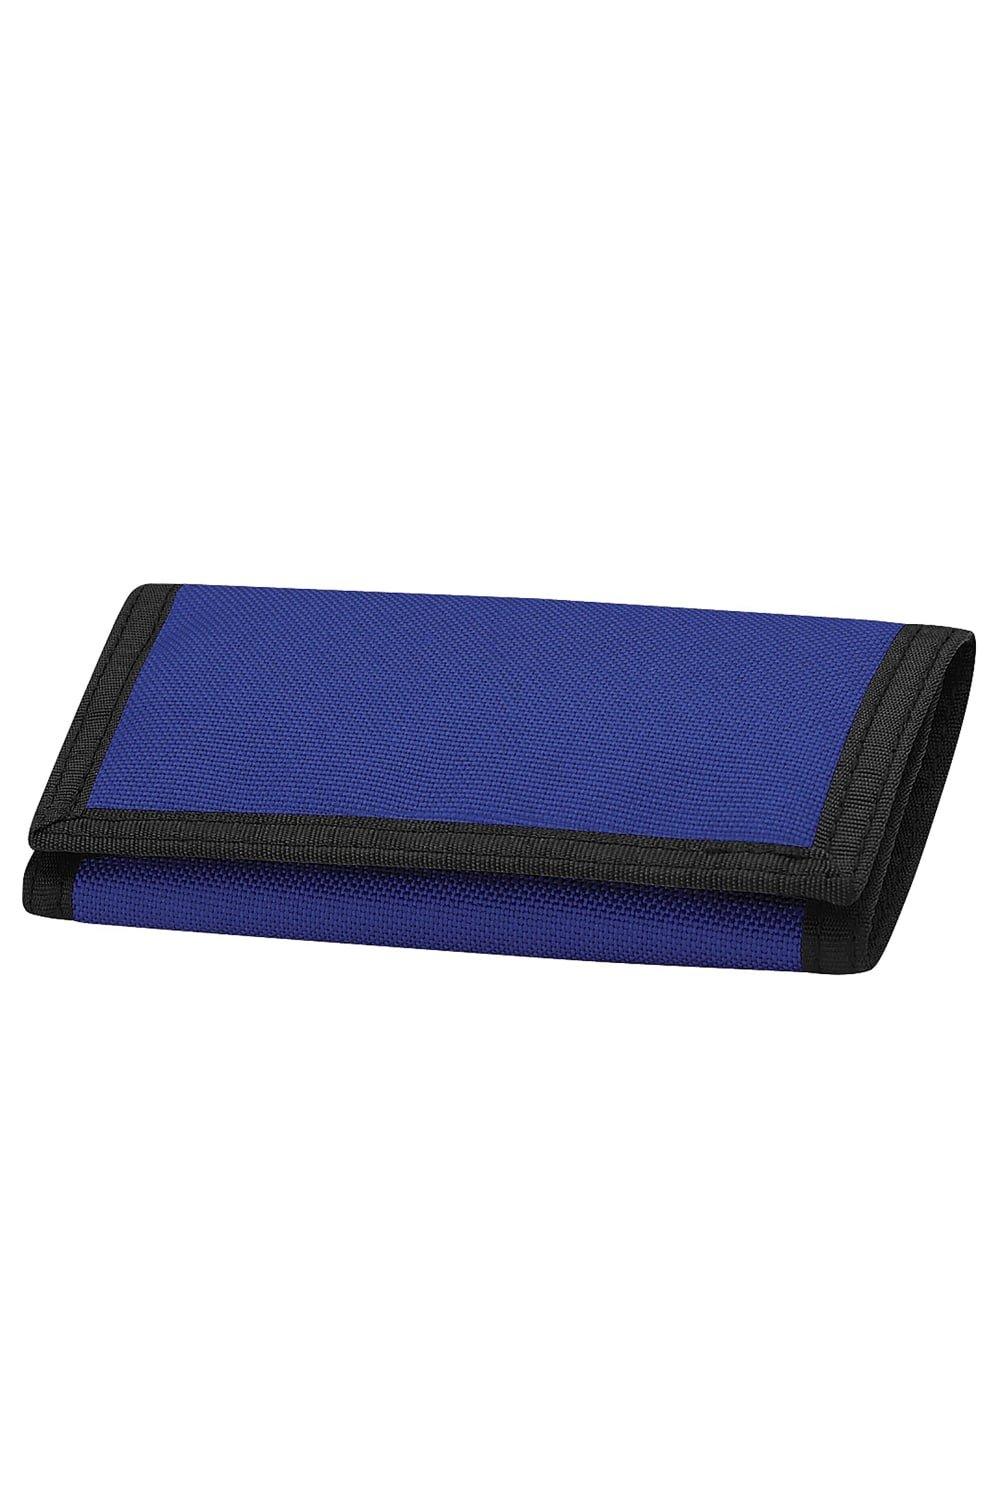 Кошелек Ripper (2 шт.) Bagbase, синий переноска прямоугольная 13 5 х 9 3 х 10 см черная